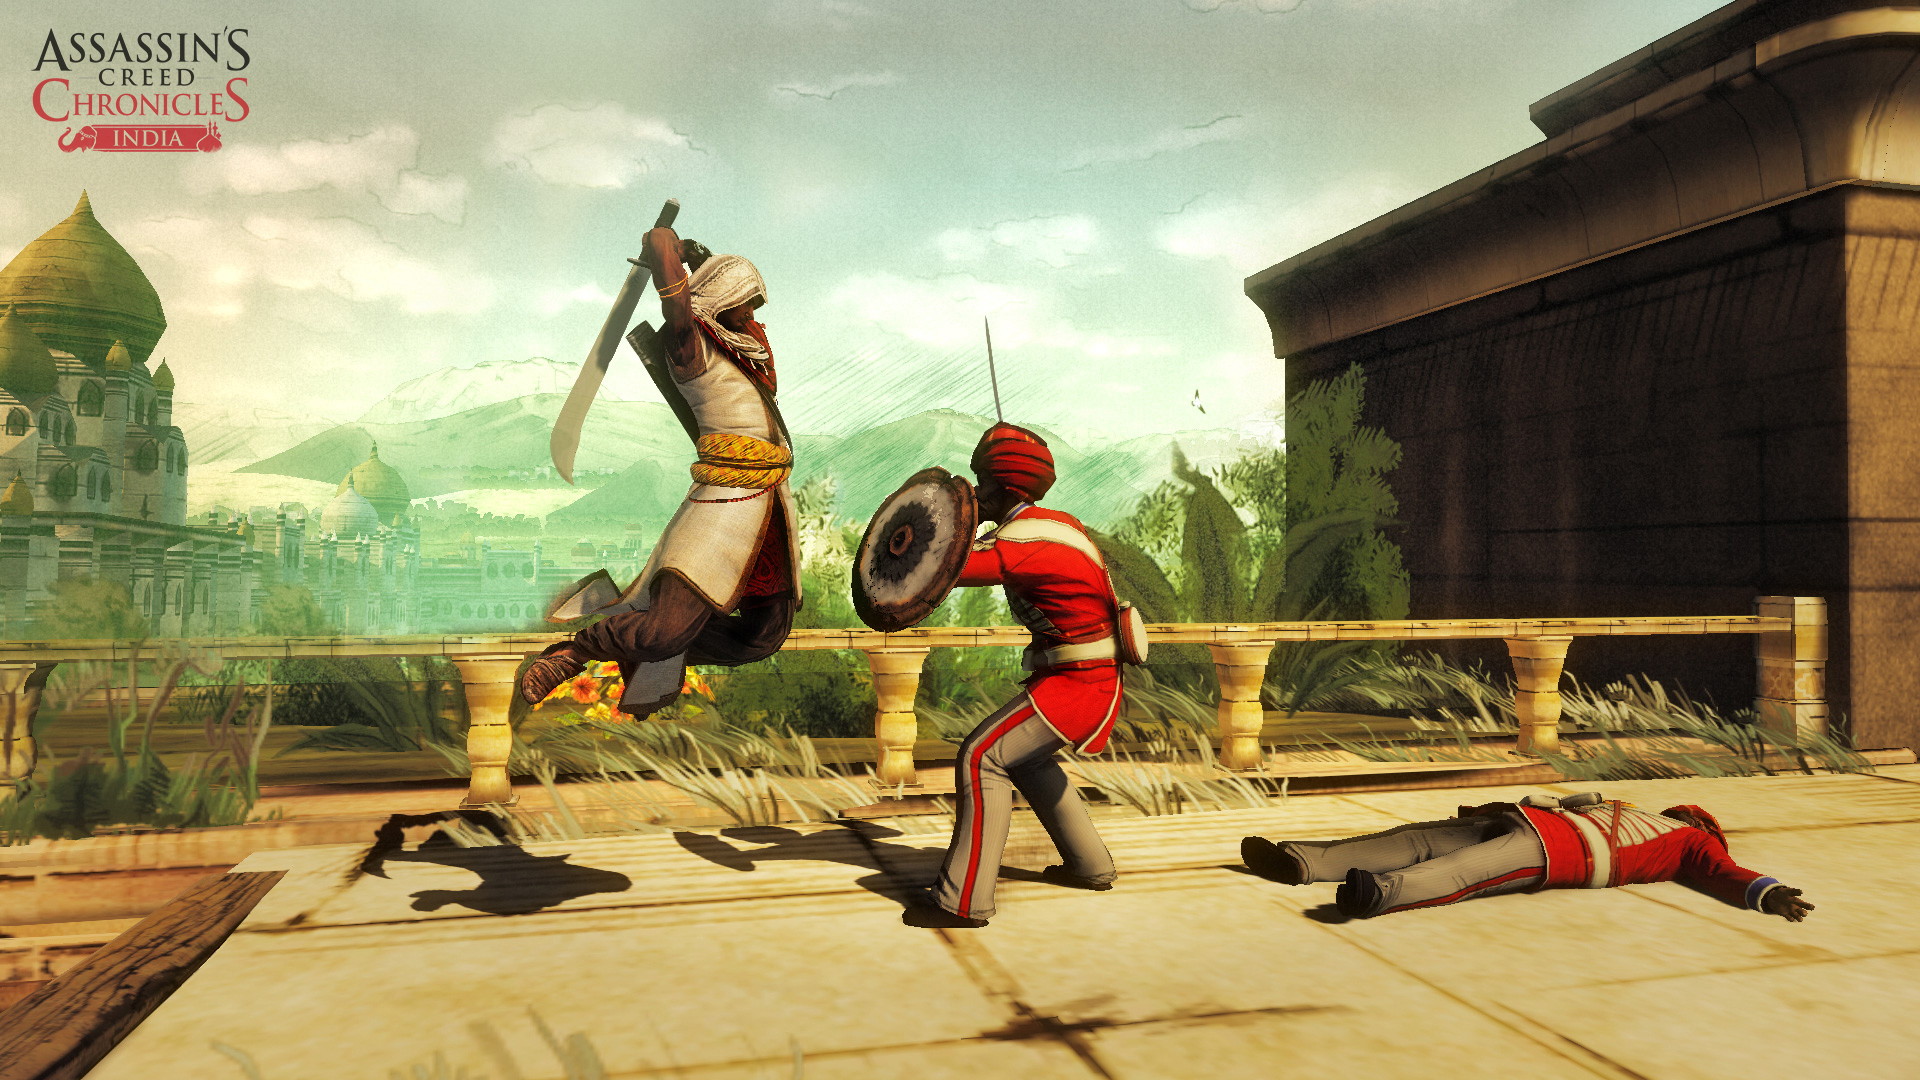 Assassin's Creed Chronicles: India - screenshot 9